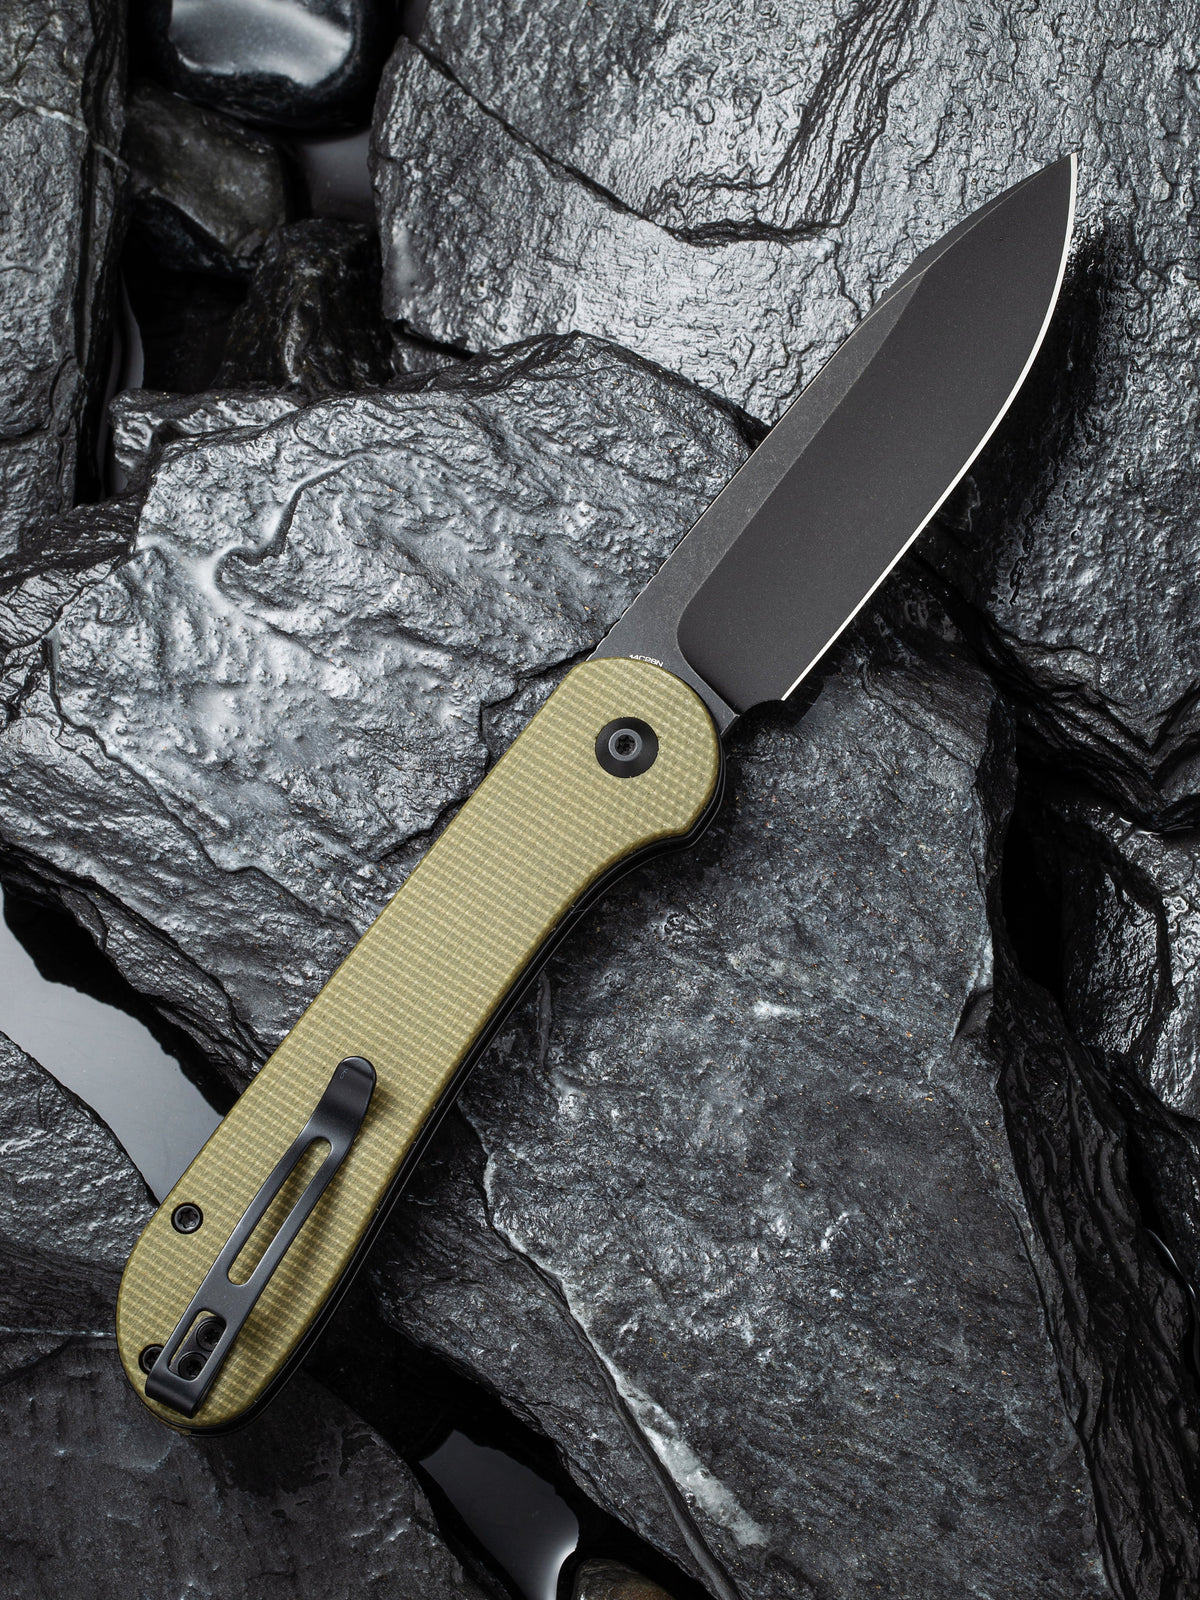 CIVIVI Button Lock Elementum | Olive Micarta Handle Black S/S Liner Black Stonewashed 14C28N Blade